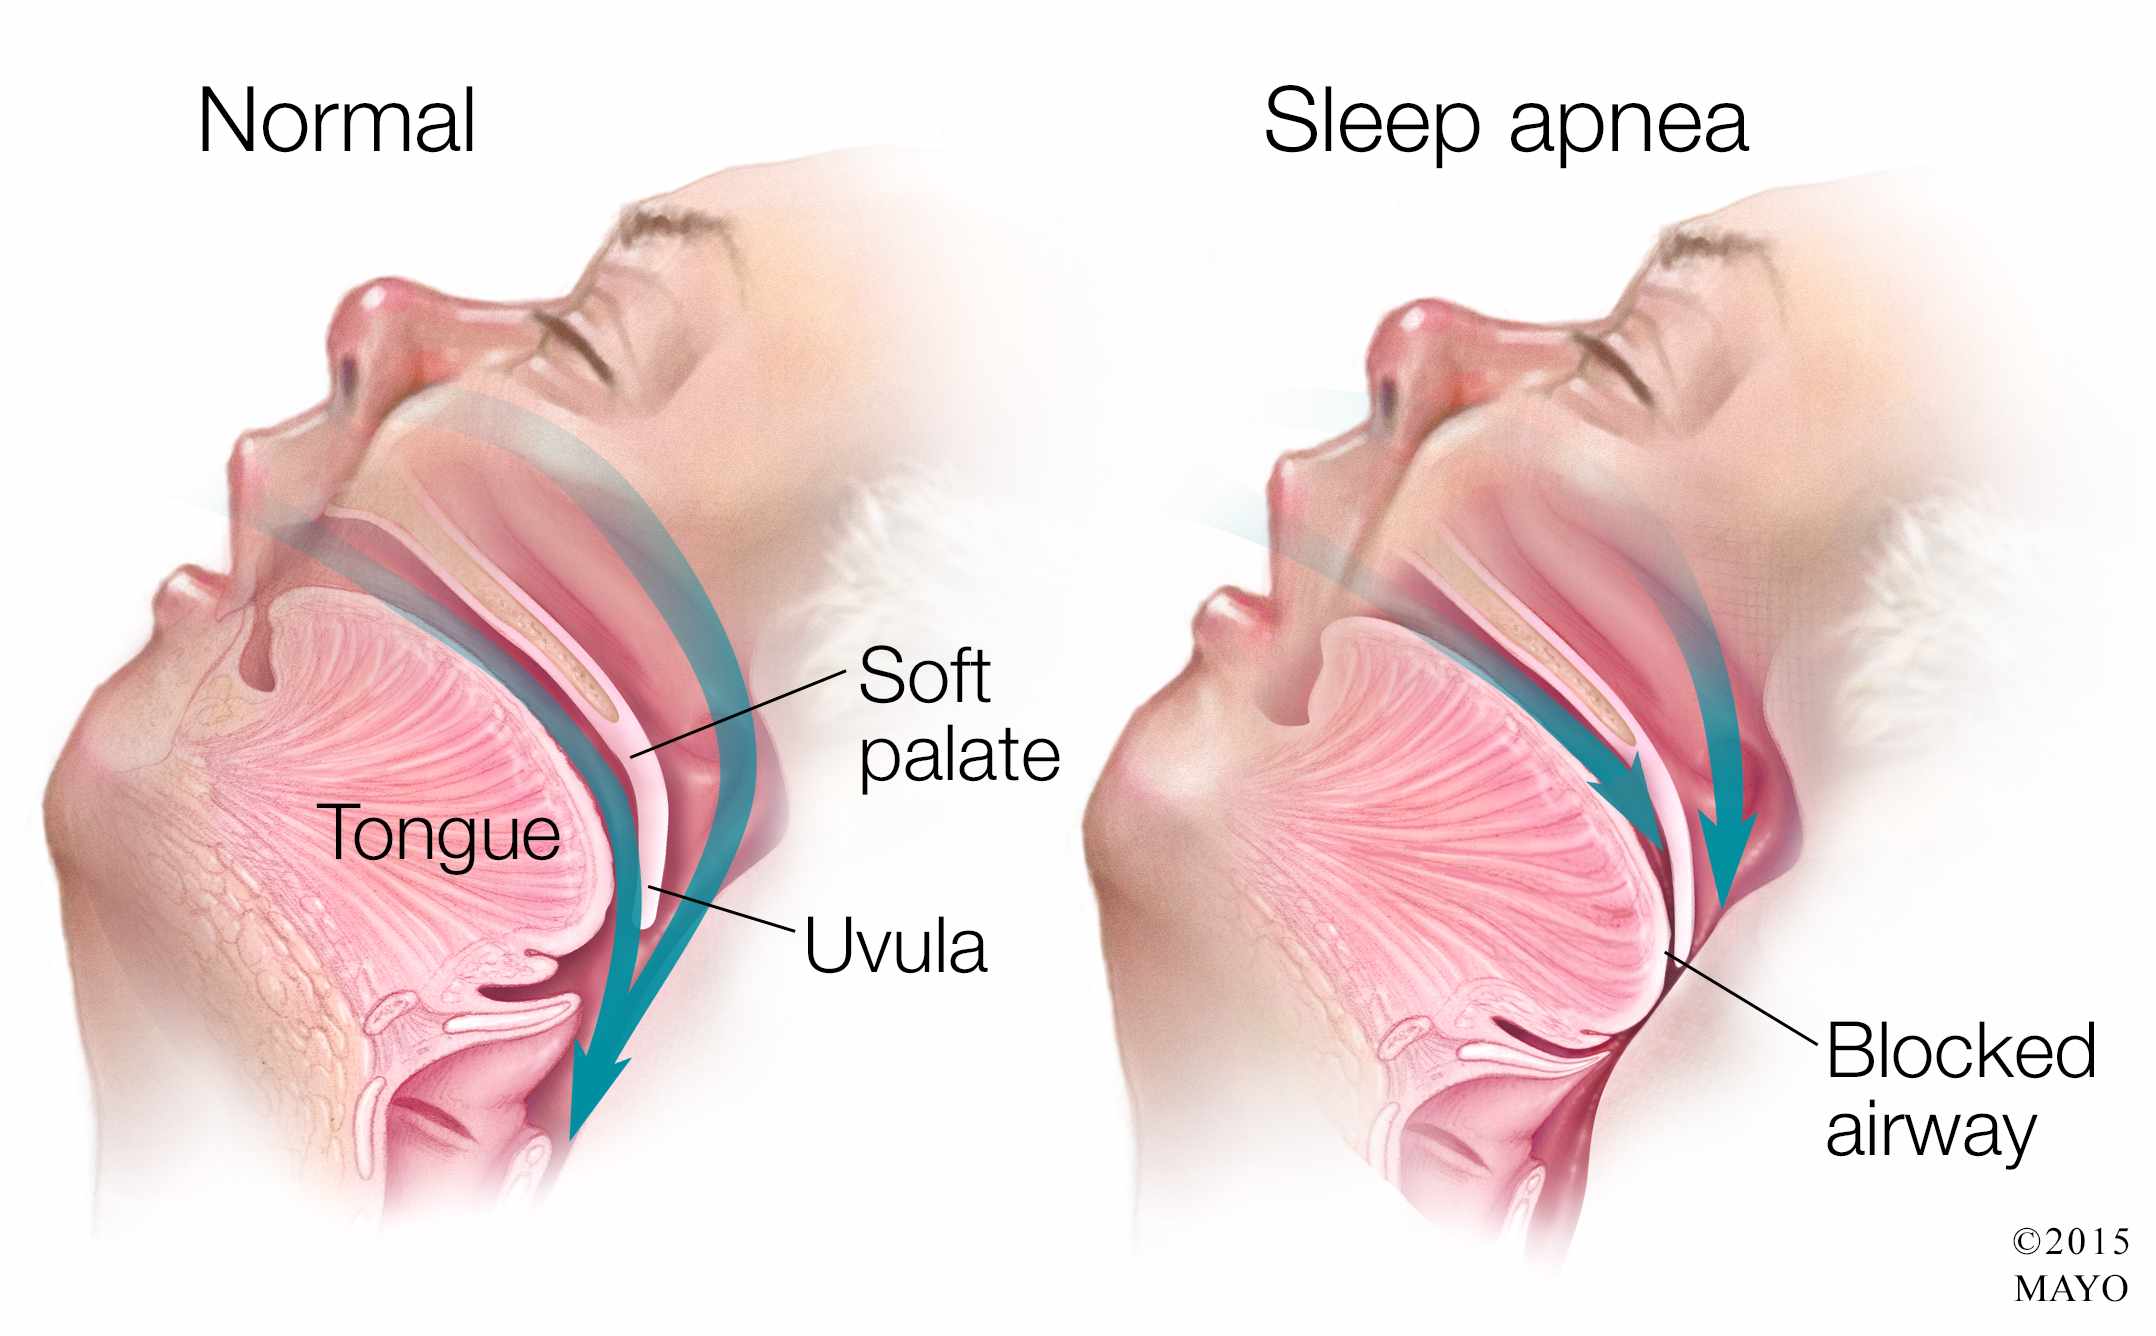 Sleep apnea: The serious sleep disorder - Mayo Clinic News Network